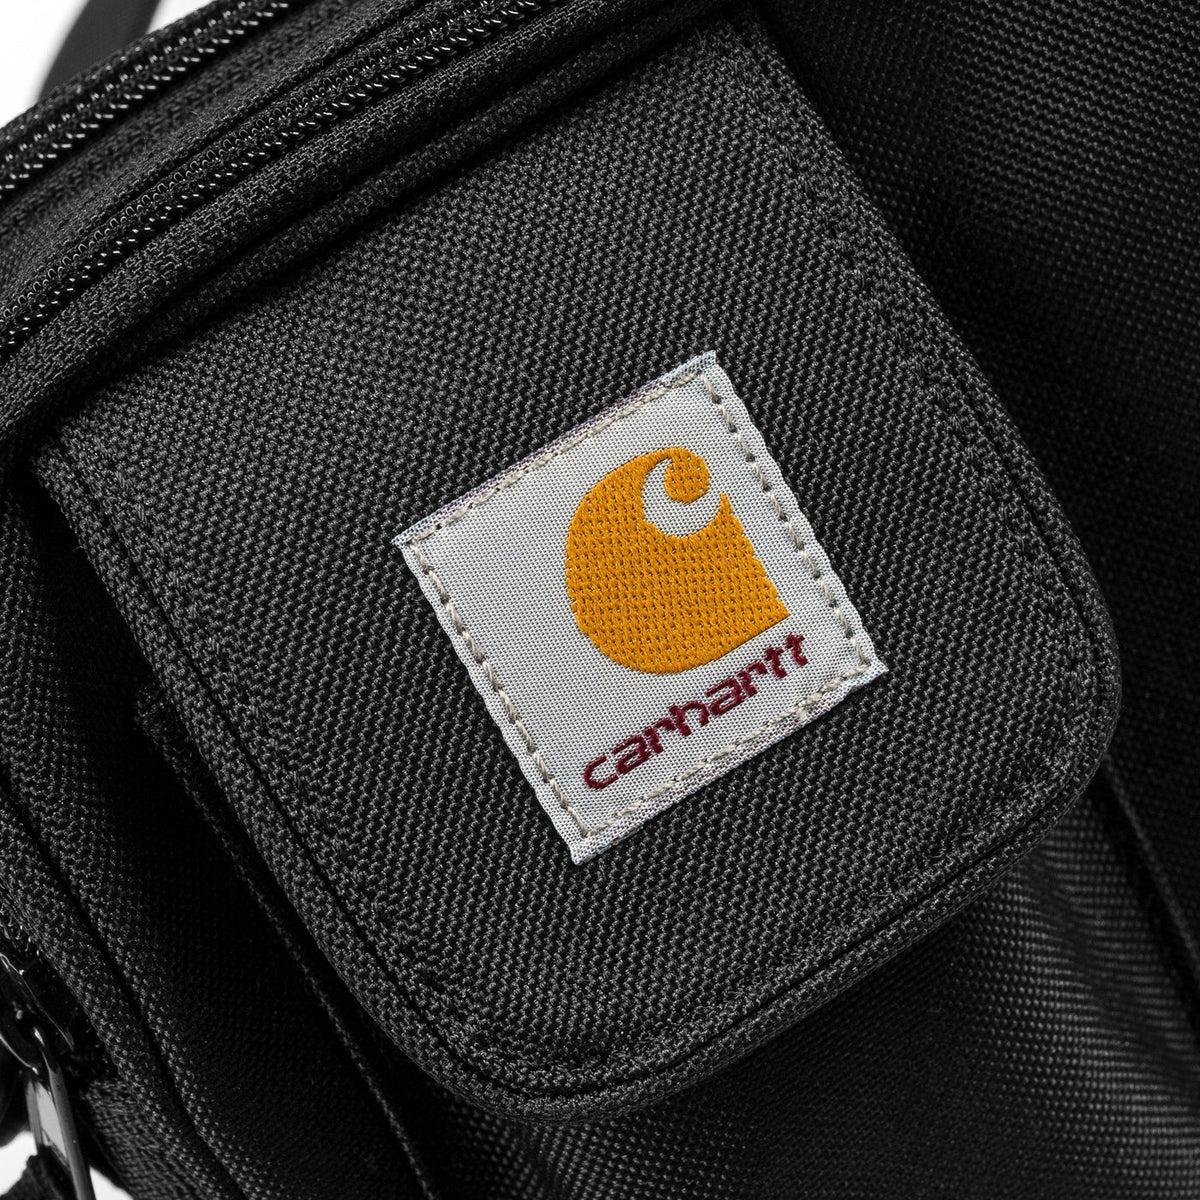 Shop Carhartt Unisex Canvas Street Style Bag in Bag 2WAY Plain Oversized ( CARHARTT-I031470) by セレクタージュ